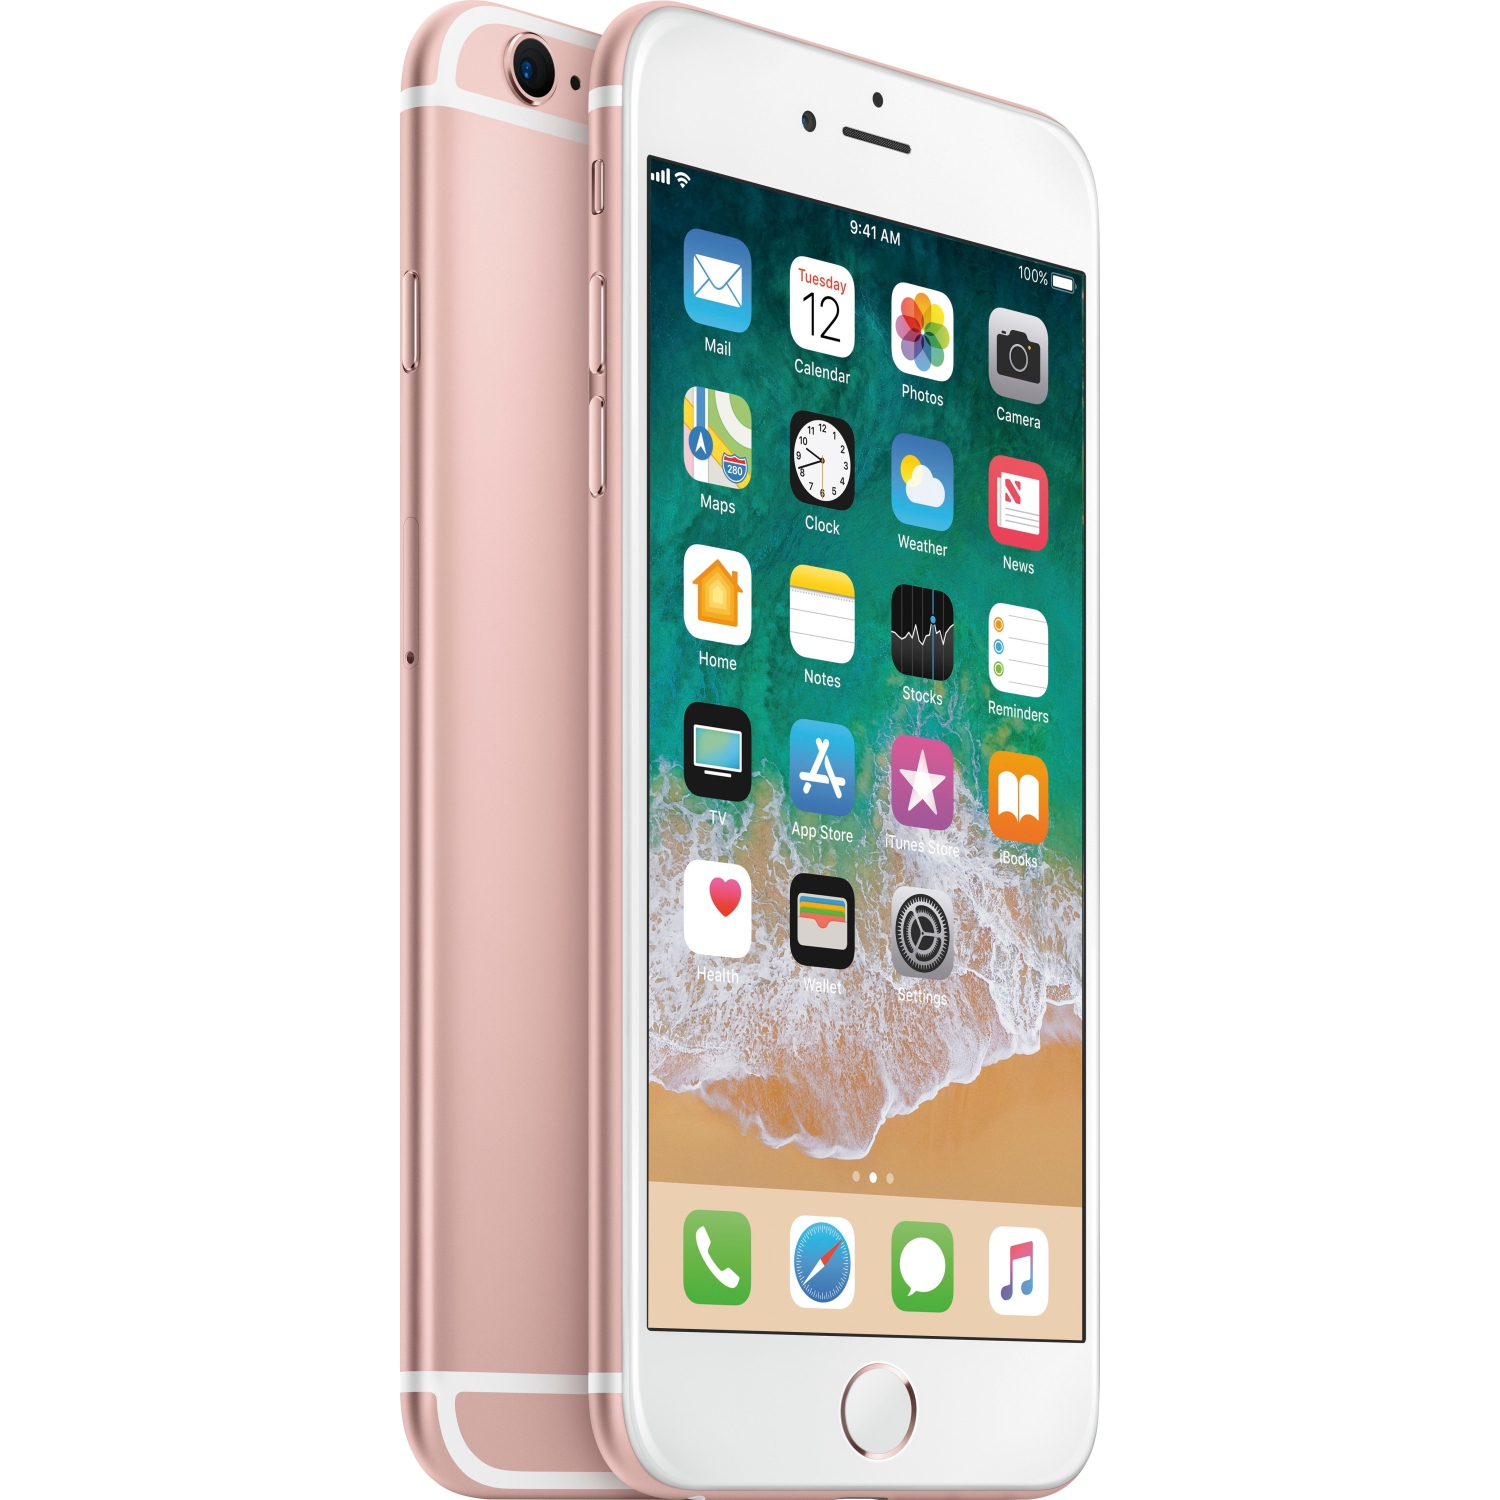 Apple iPhone 6s Plus 64GB Smartphone - Rose Gold - Unlocked - Open Box